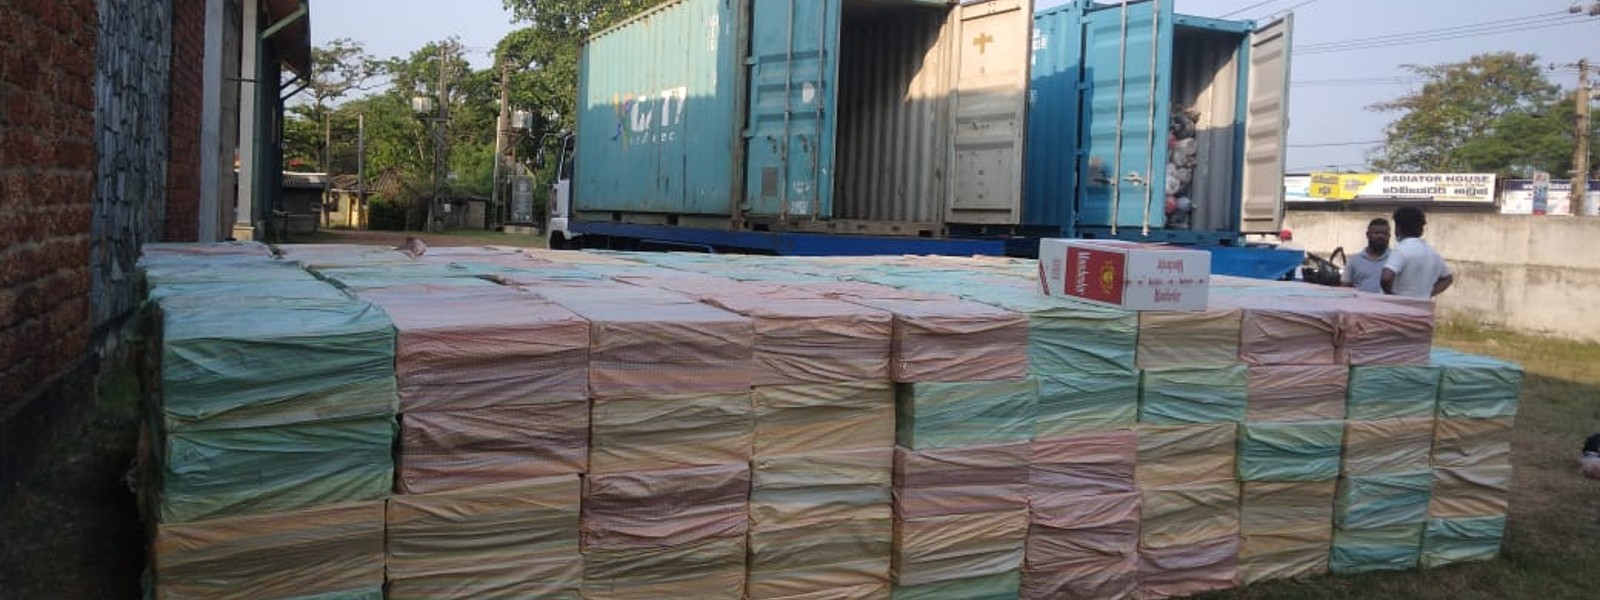 STF seizes largest haul of smuggled cigarettes in Sri Lanka